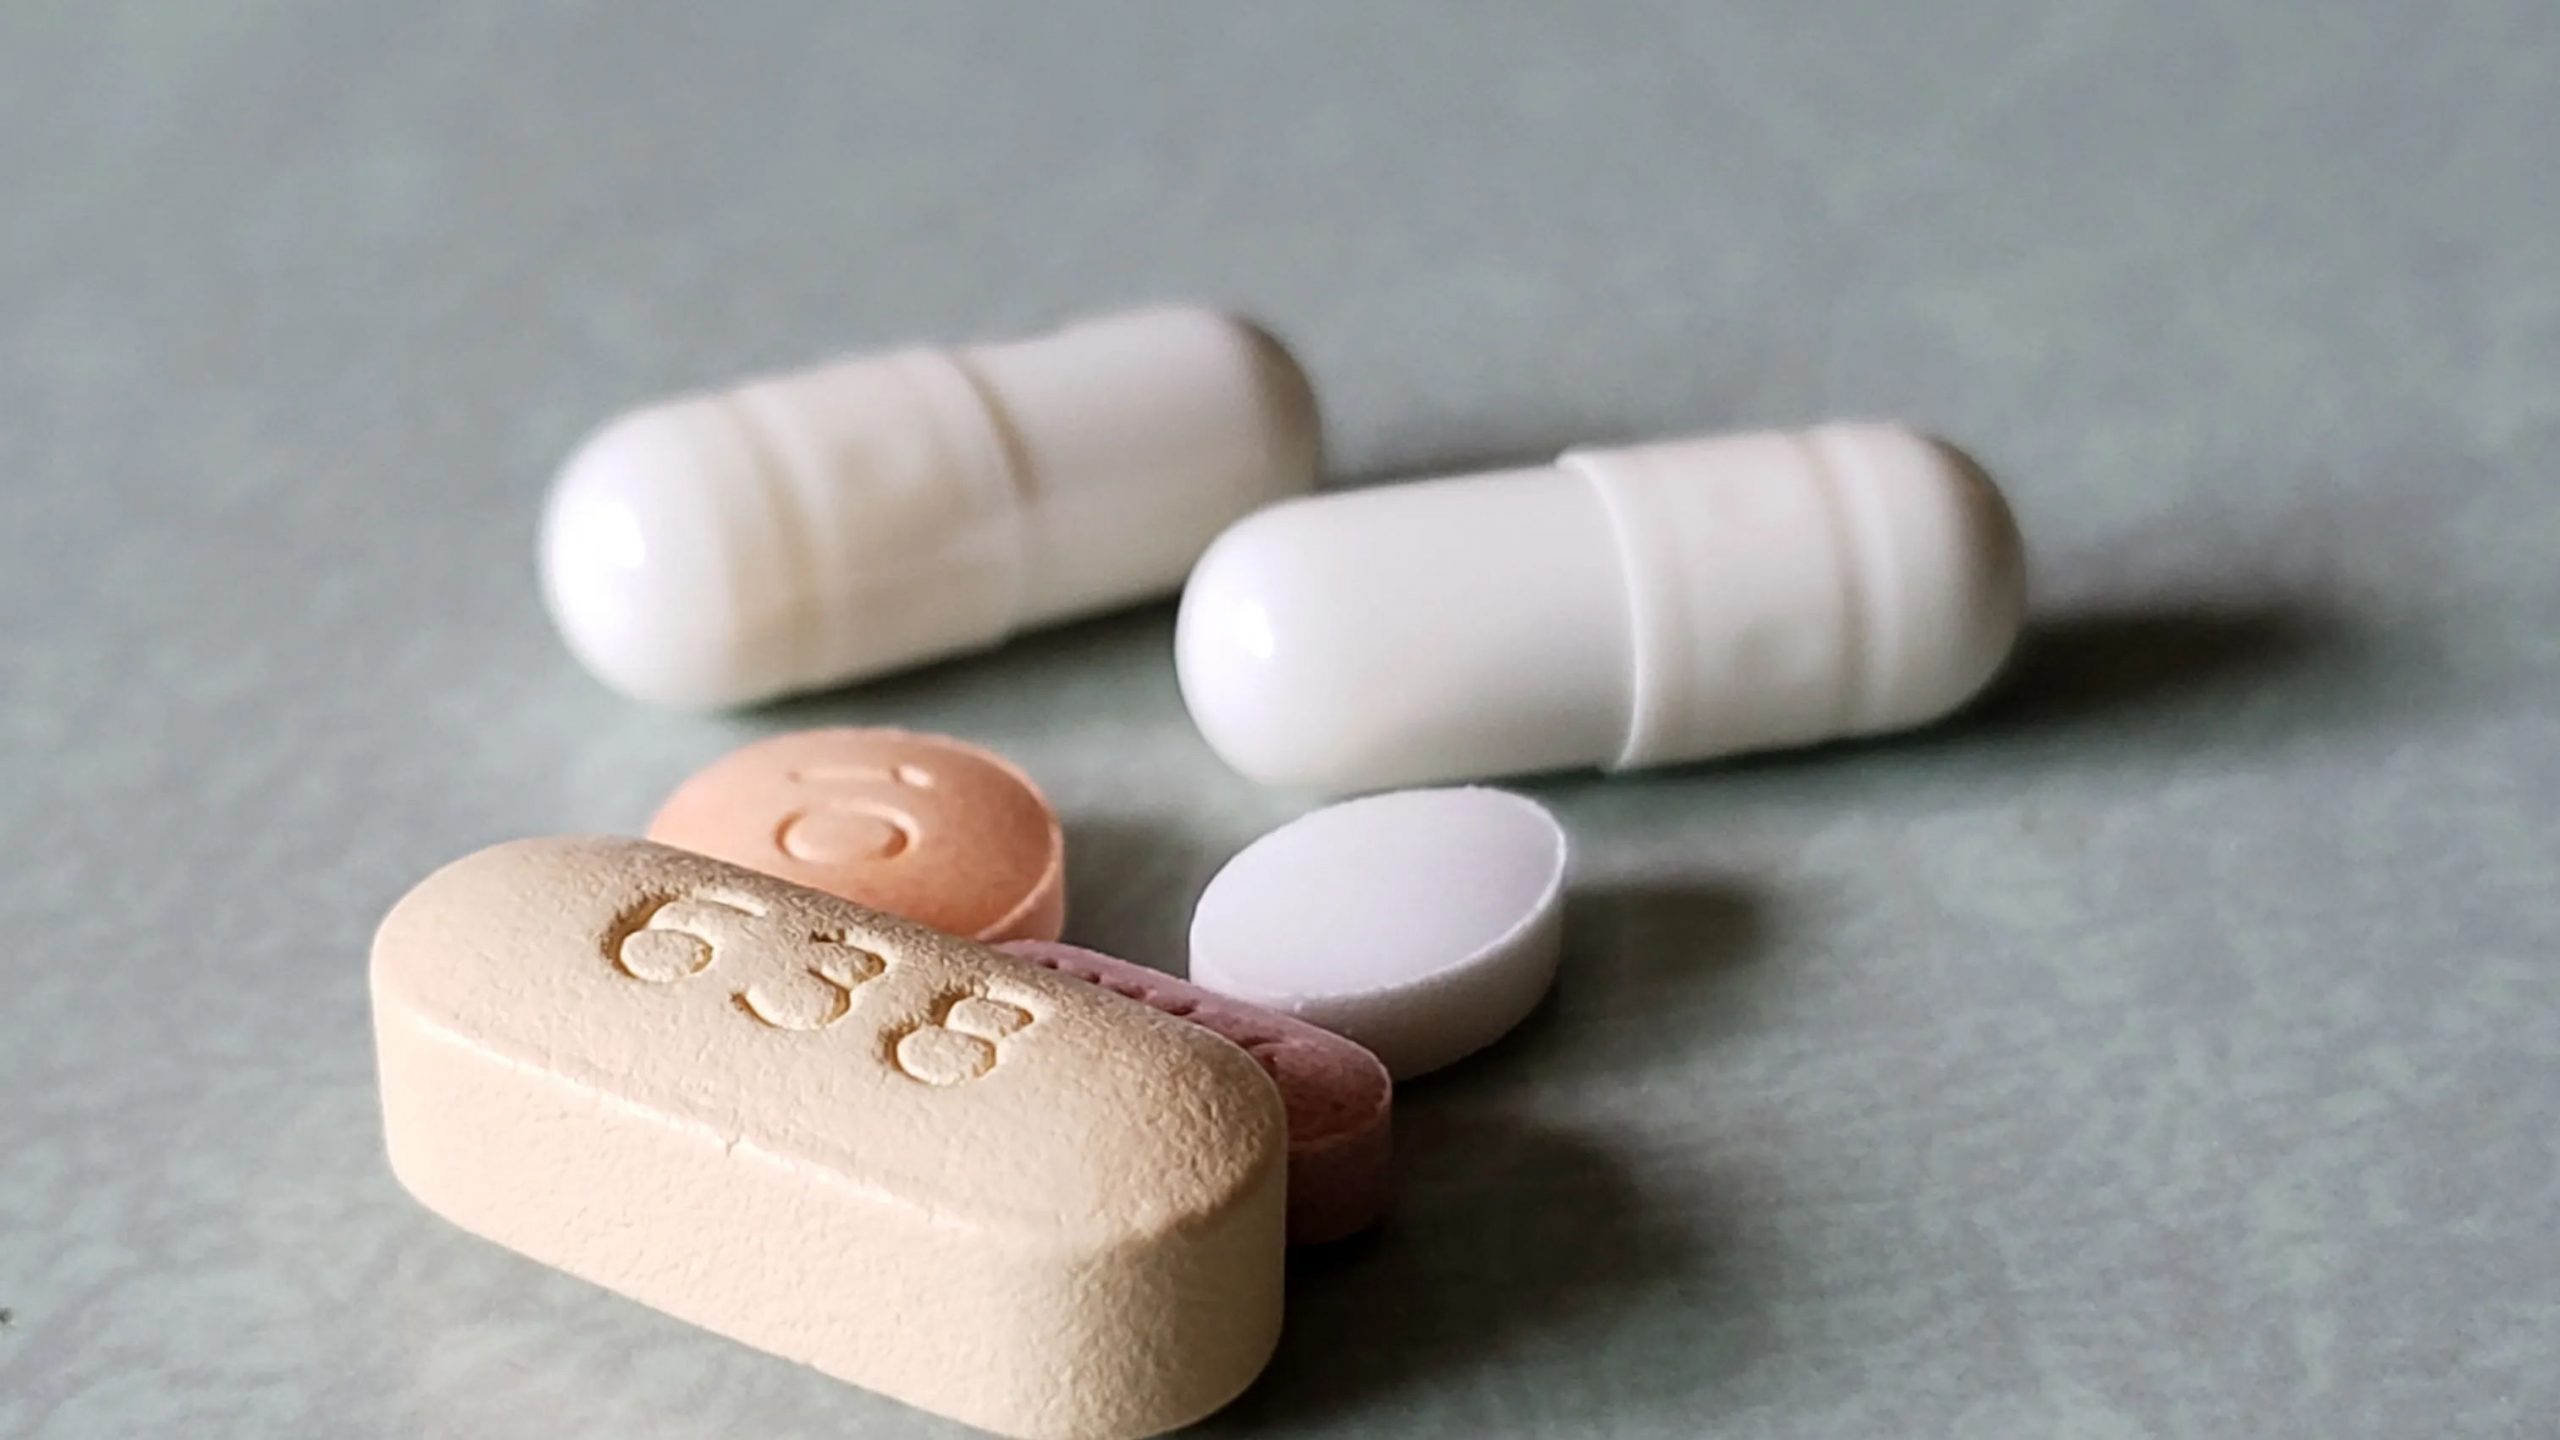 Pfizer says antiviral COVID-19 pill cut hospital, death risk by 90%